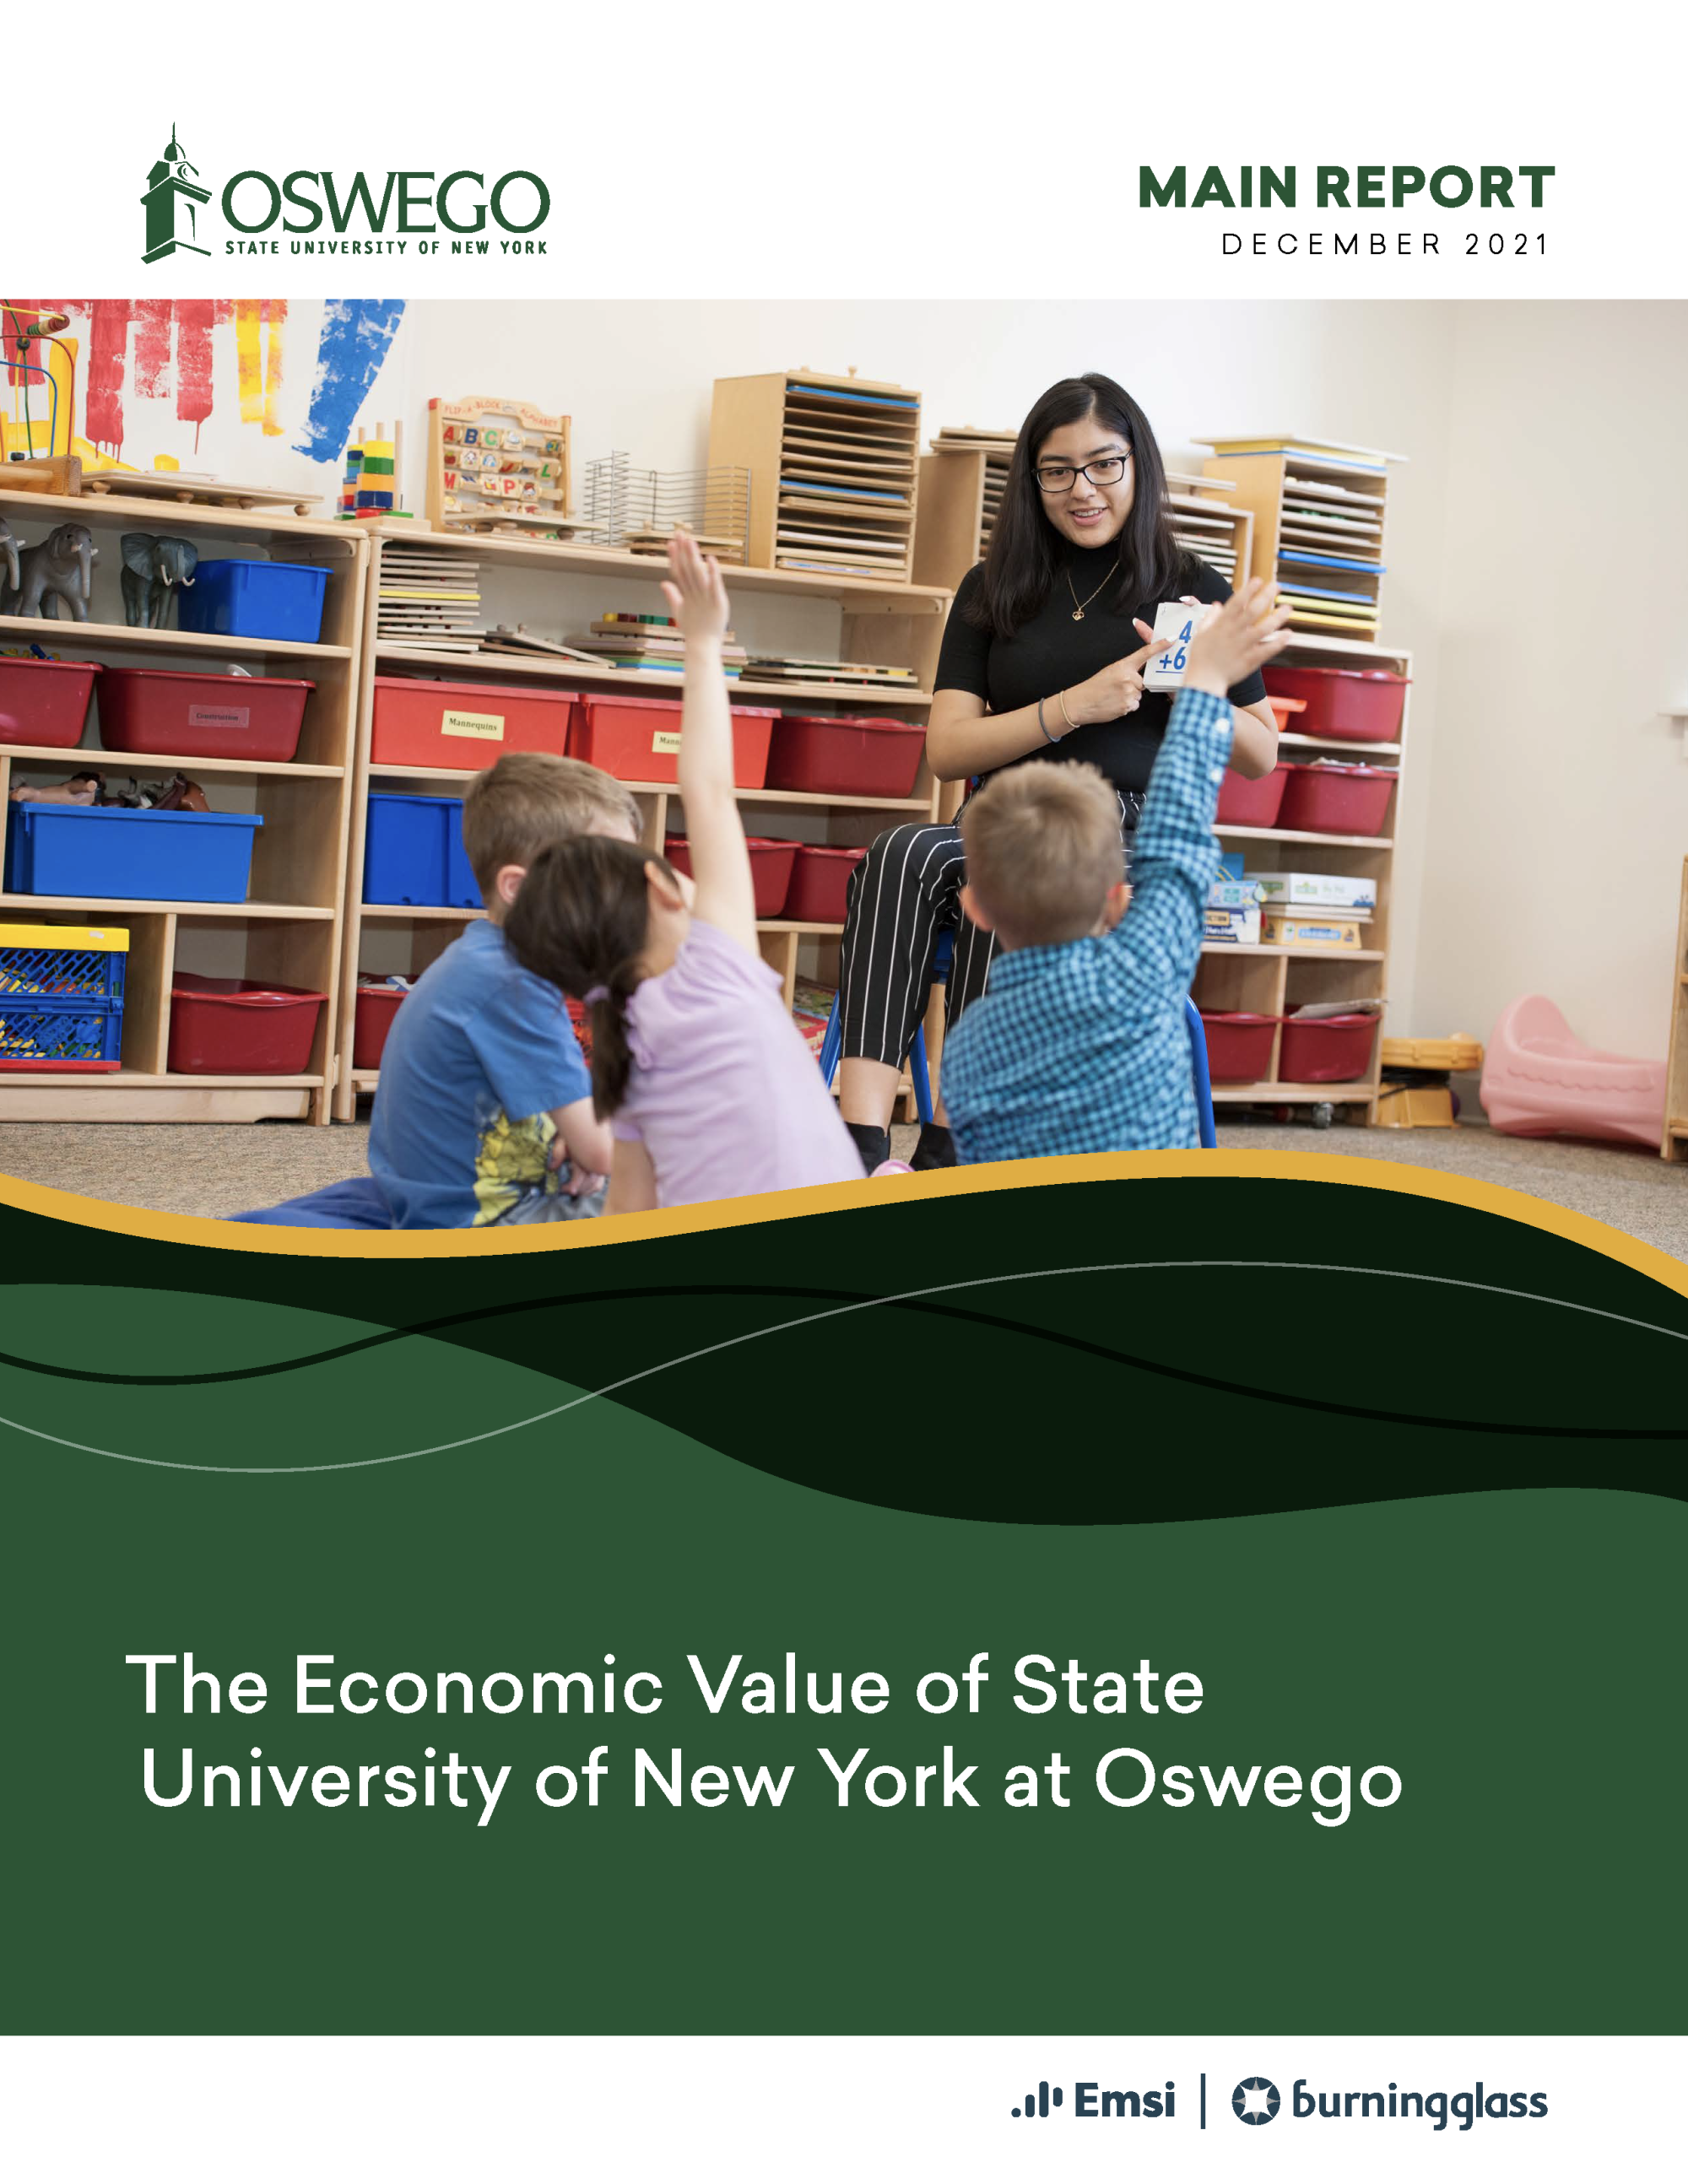 The Economic Value of State University of New York at Oswego